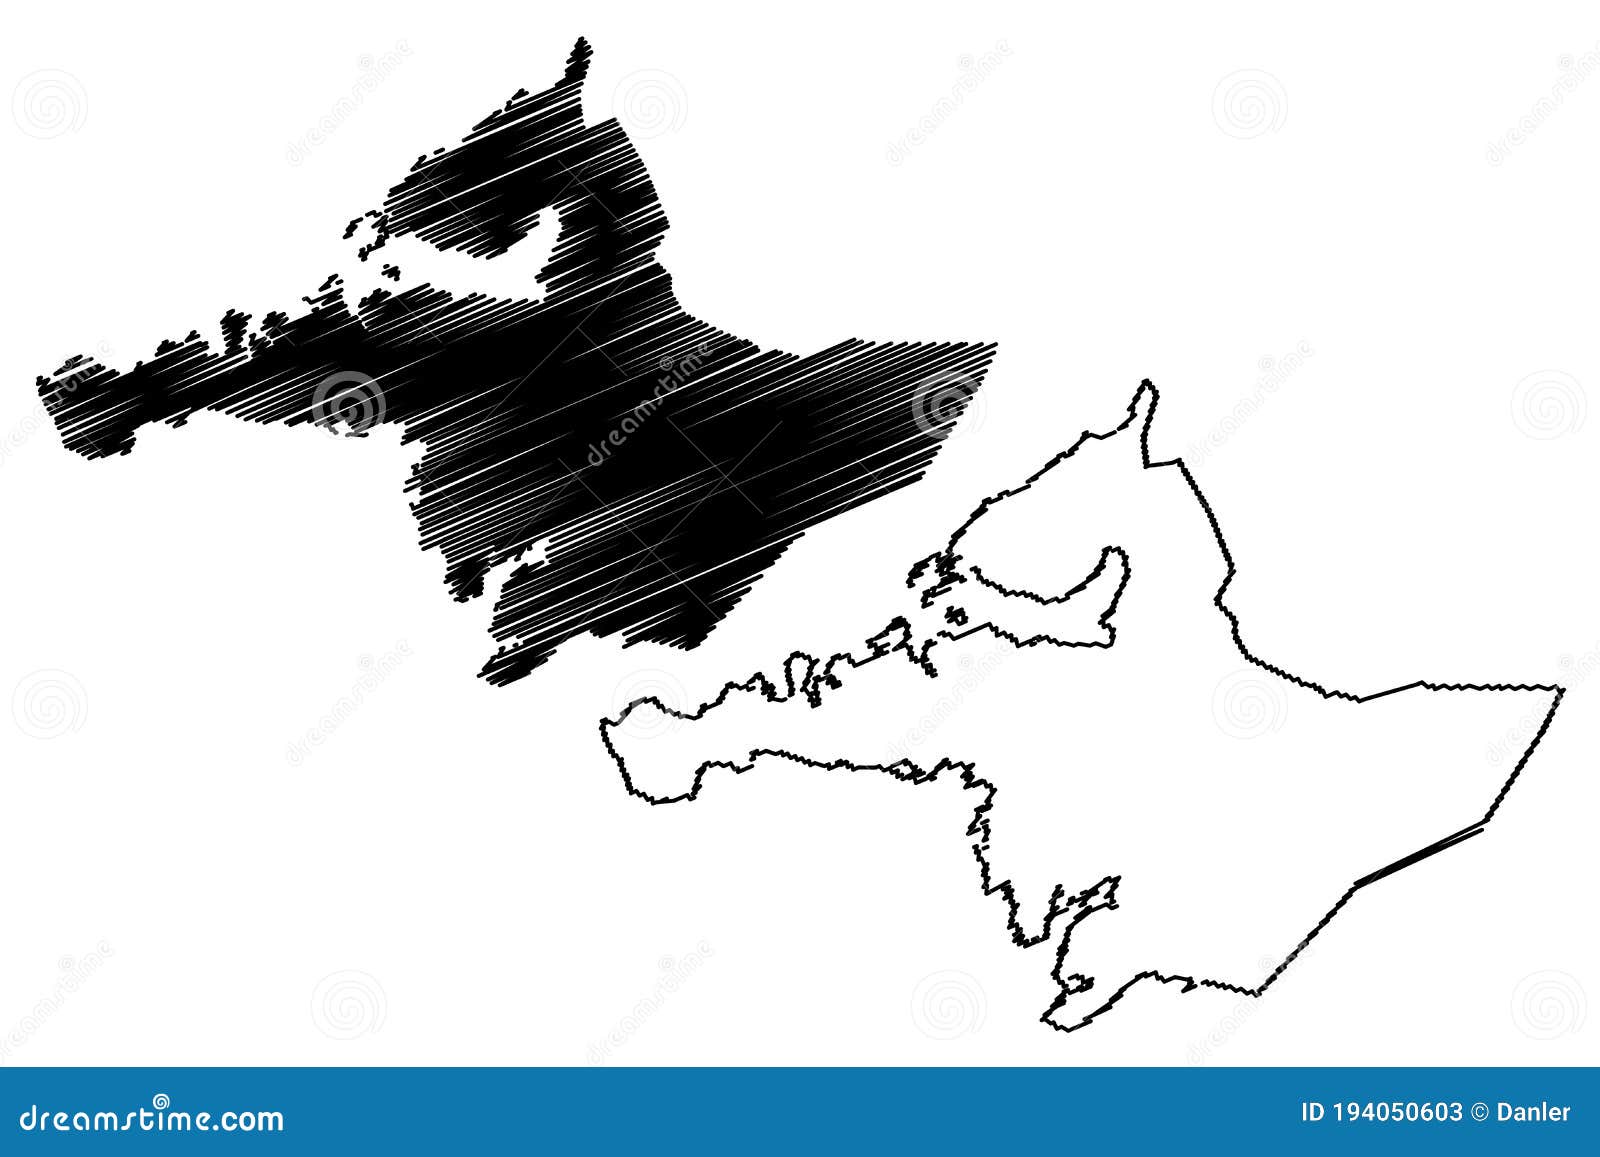 western region iceland island, regions of iceland map  , scribble sketch vesturland map